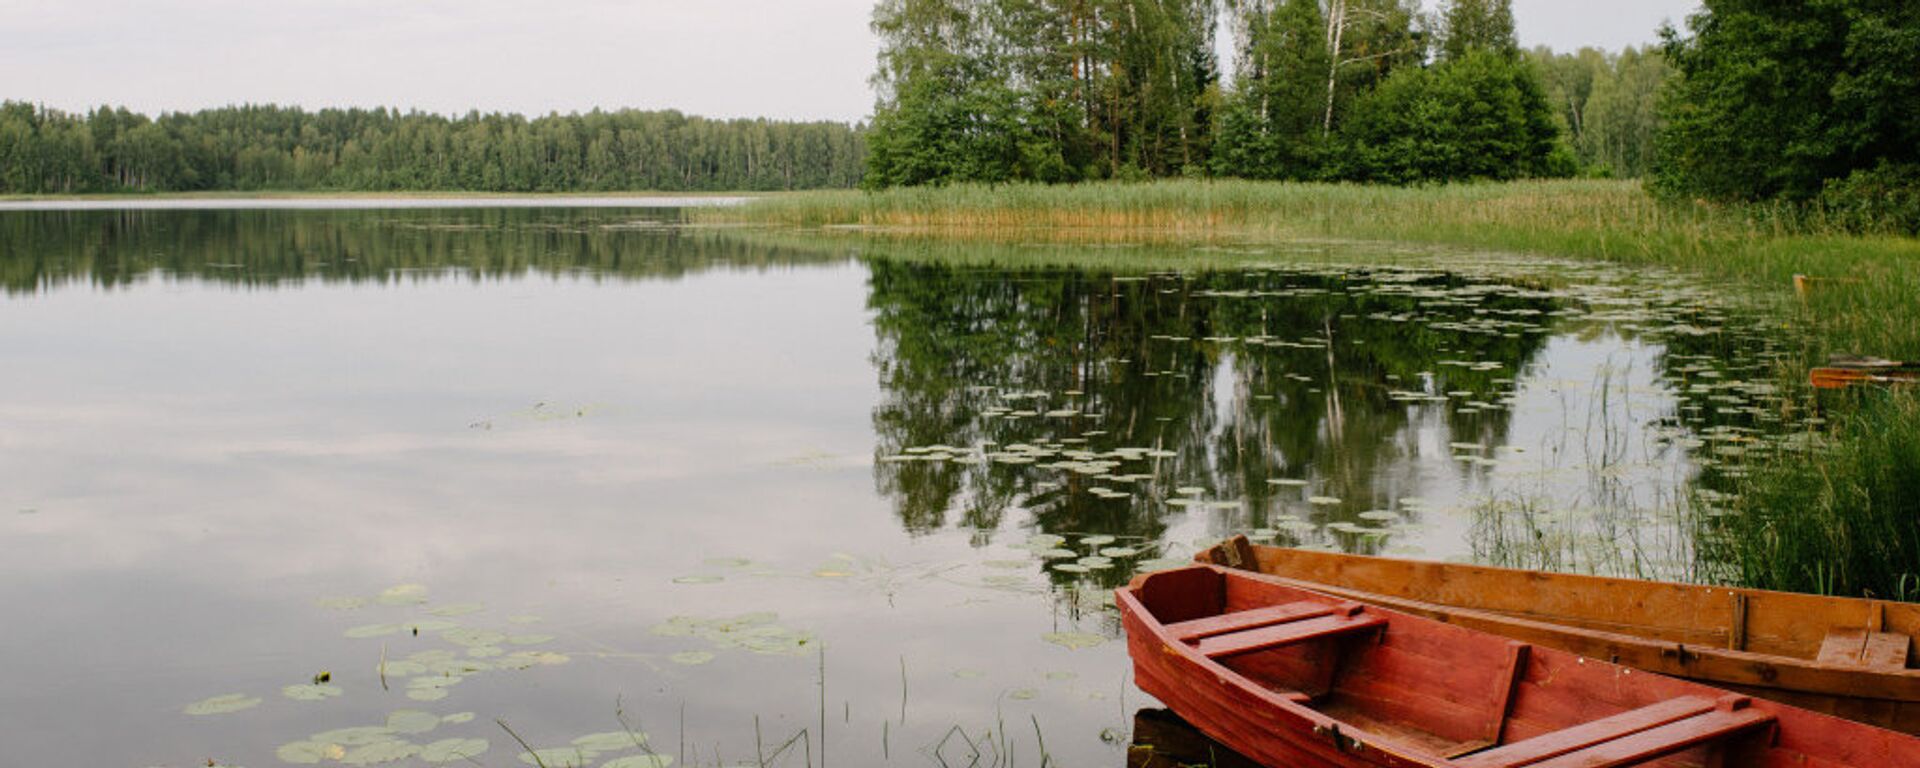 Лодки на лесном озере в Латгалии - Sputnik Latvija, 1920, 20.06.2021